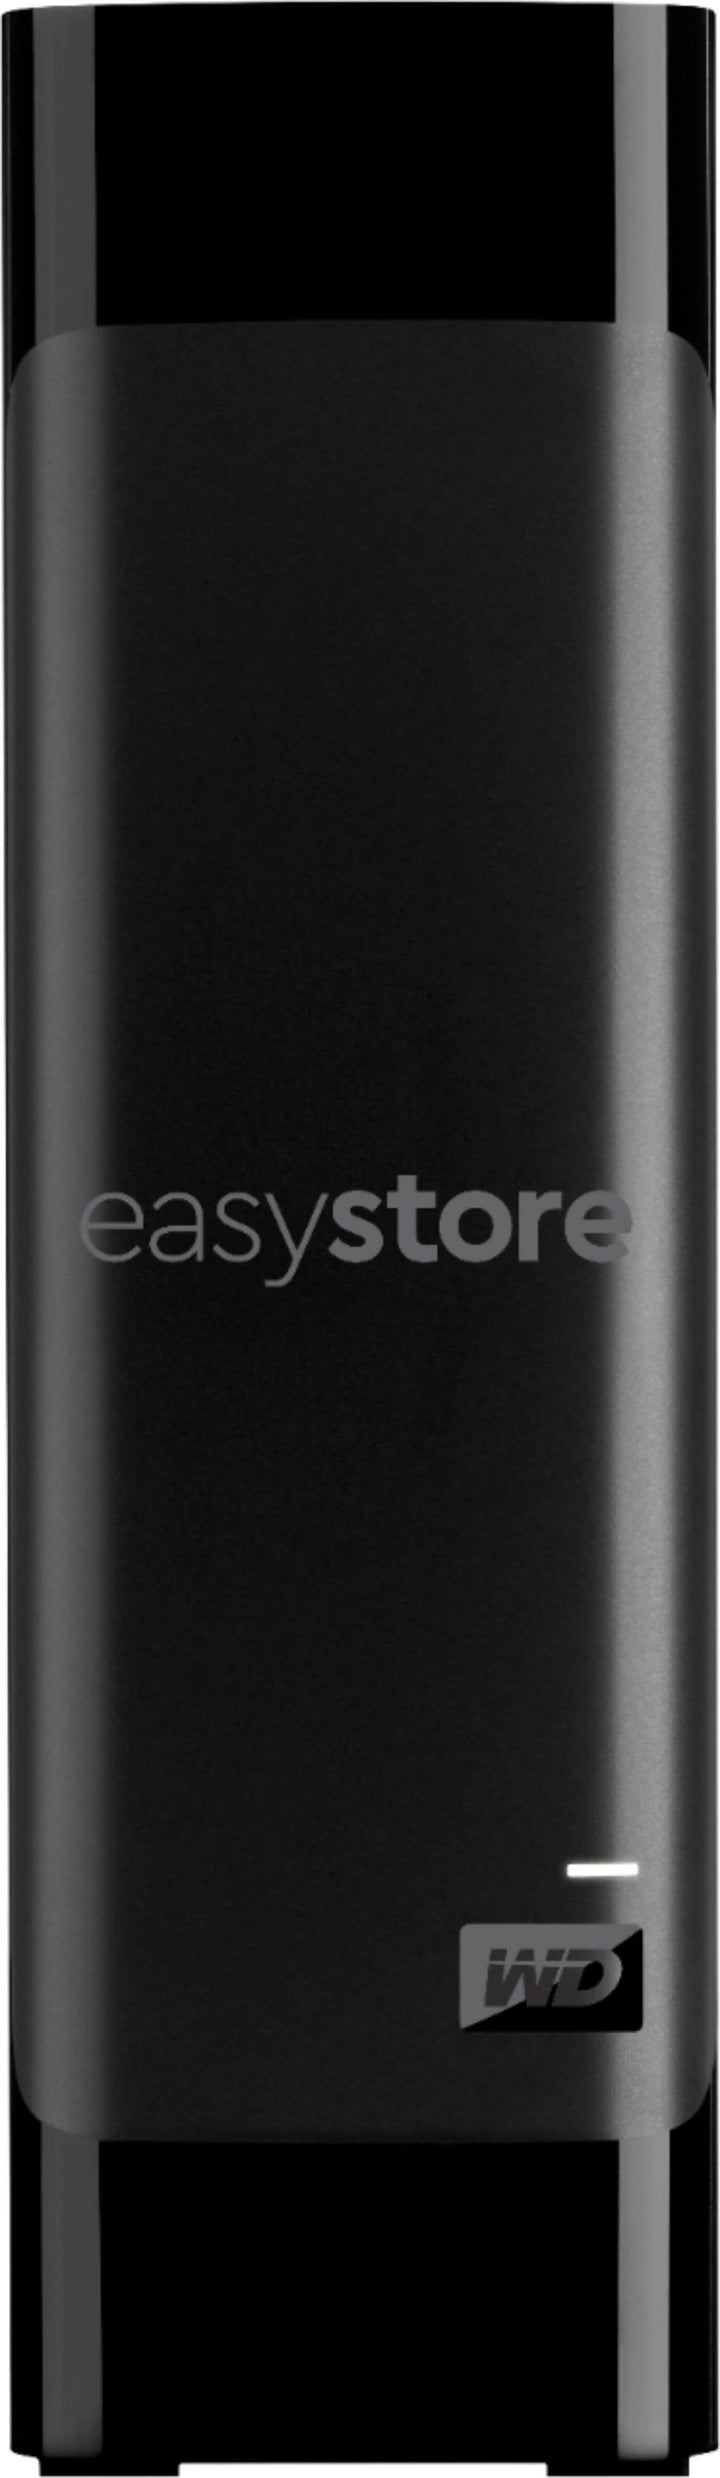 WD - easystore 16TB External USB 3.0 Hard Drive - Black_0